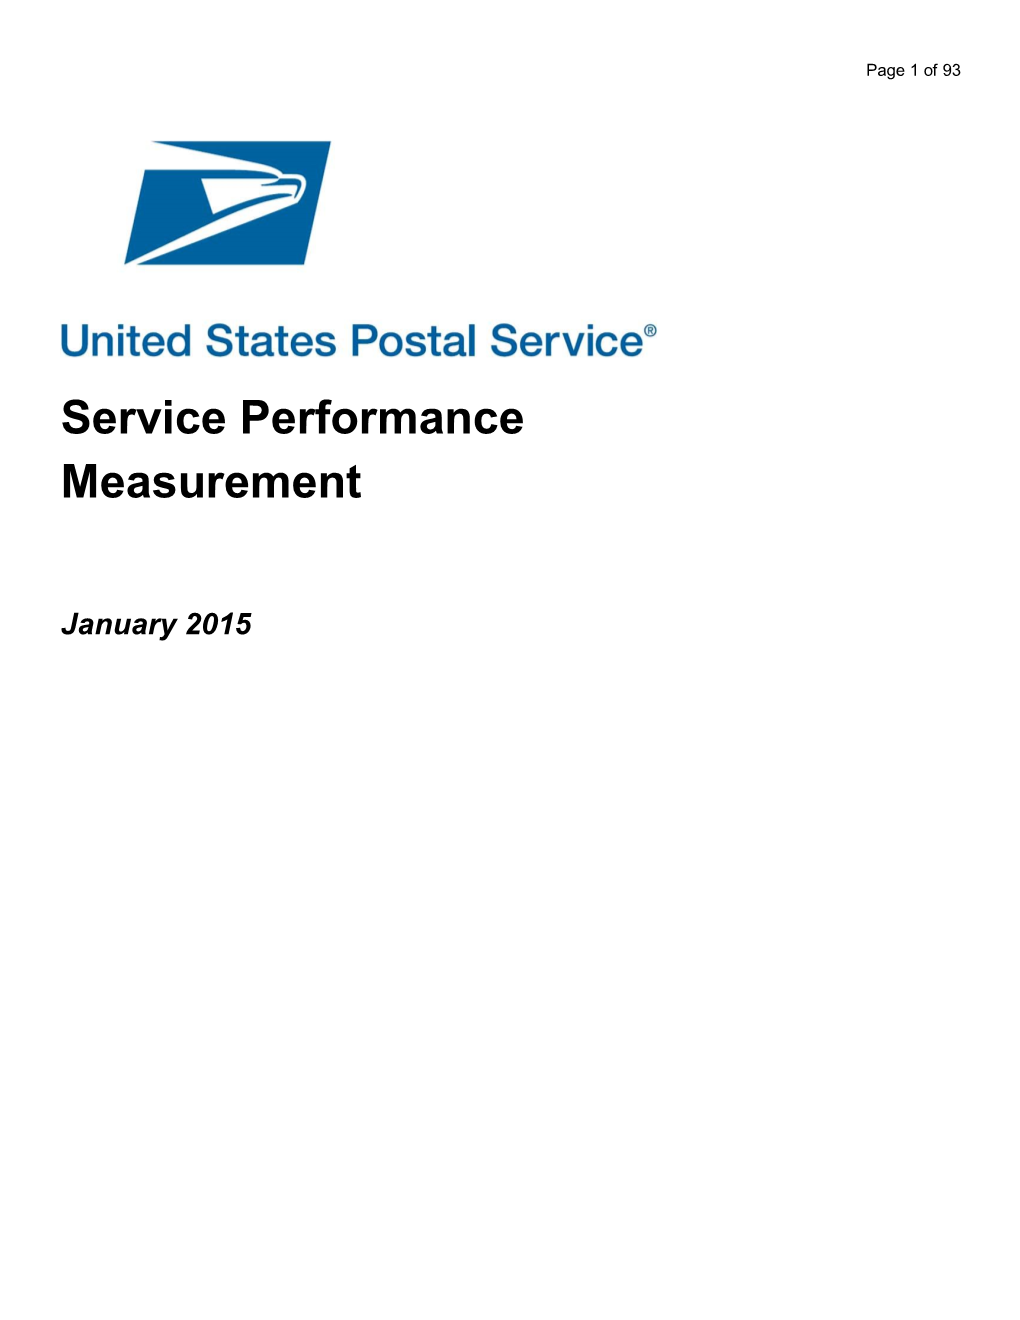 Service Performance Measurement